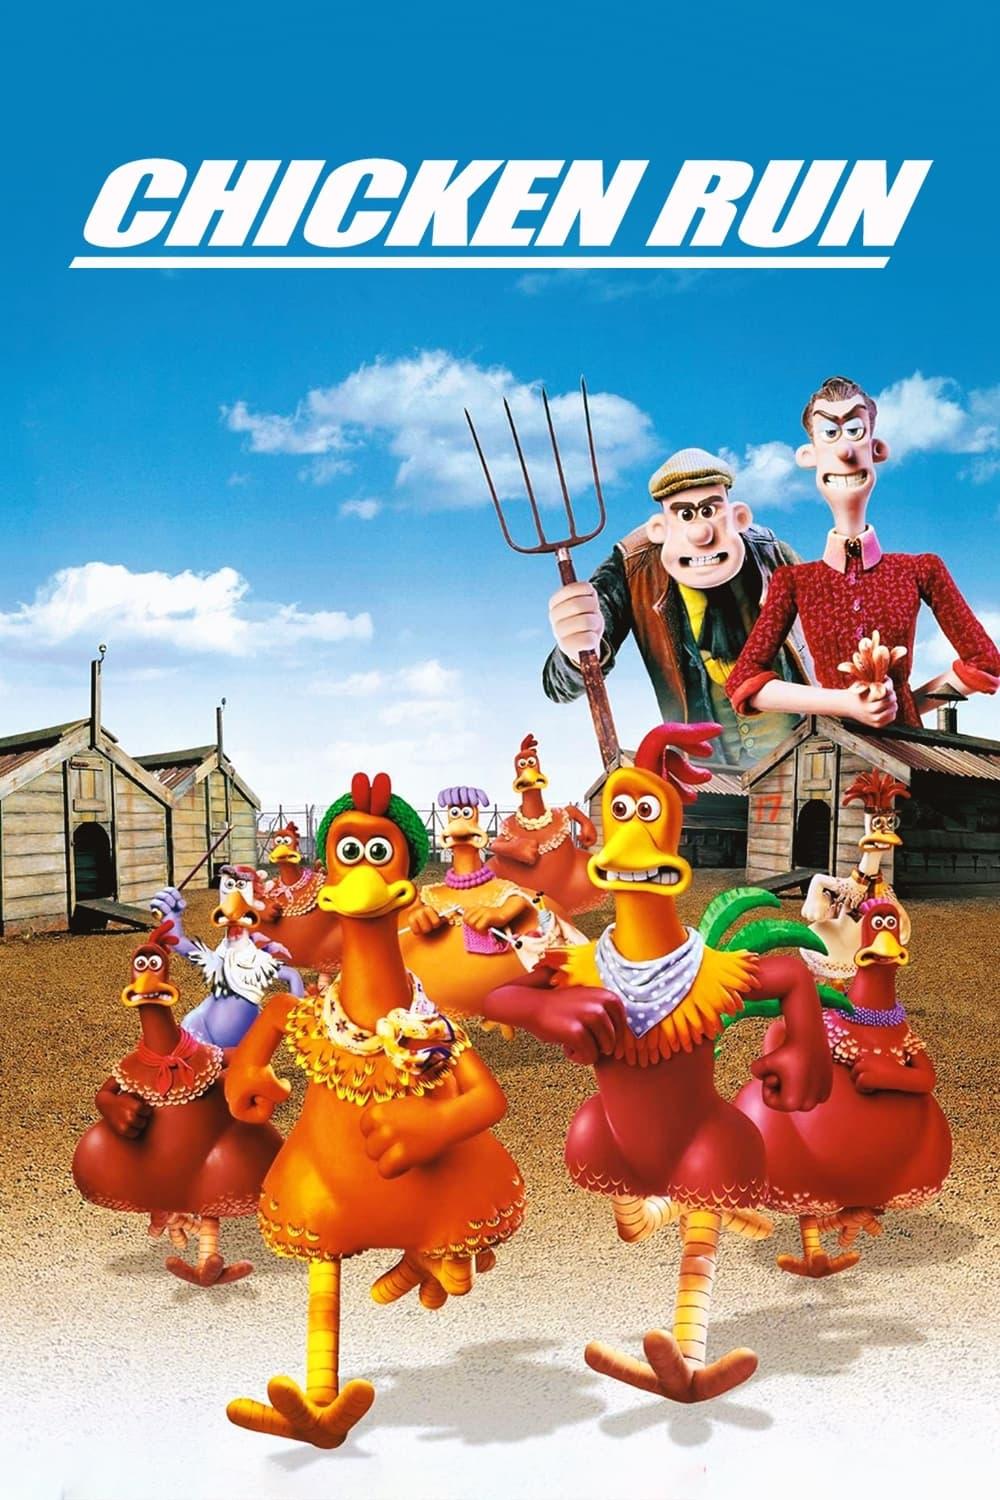 Chicken Run poster